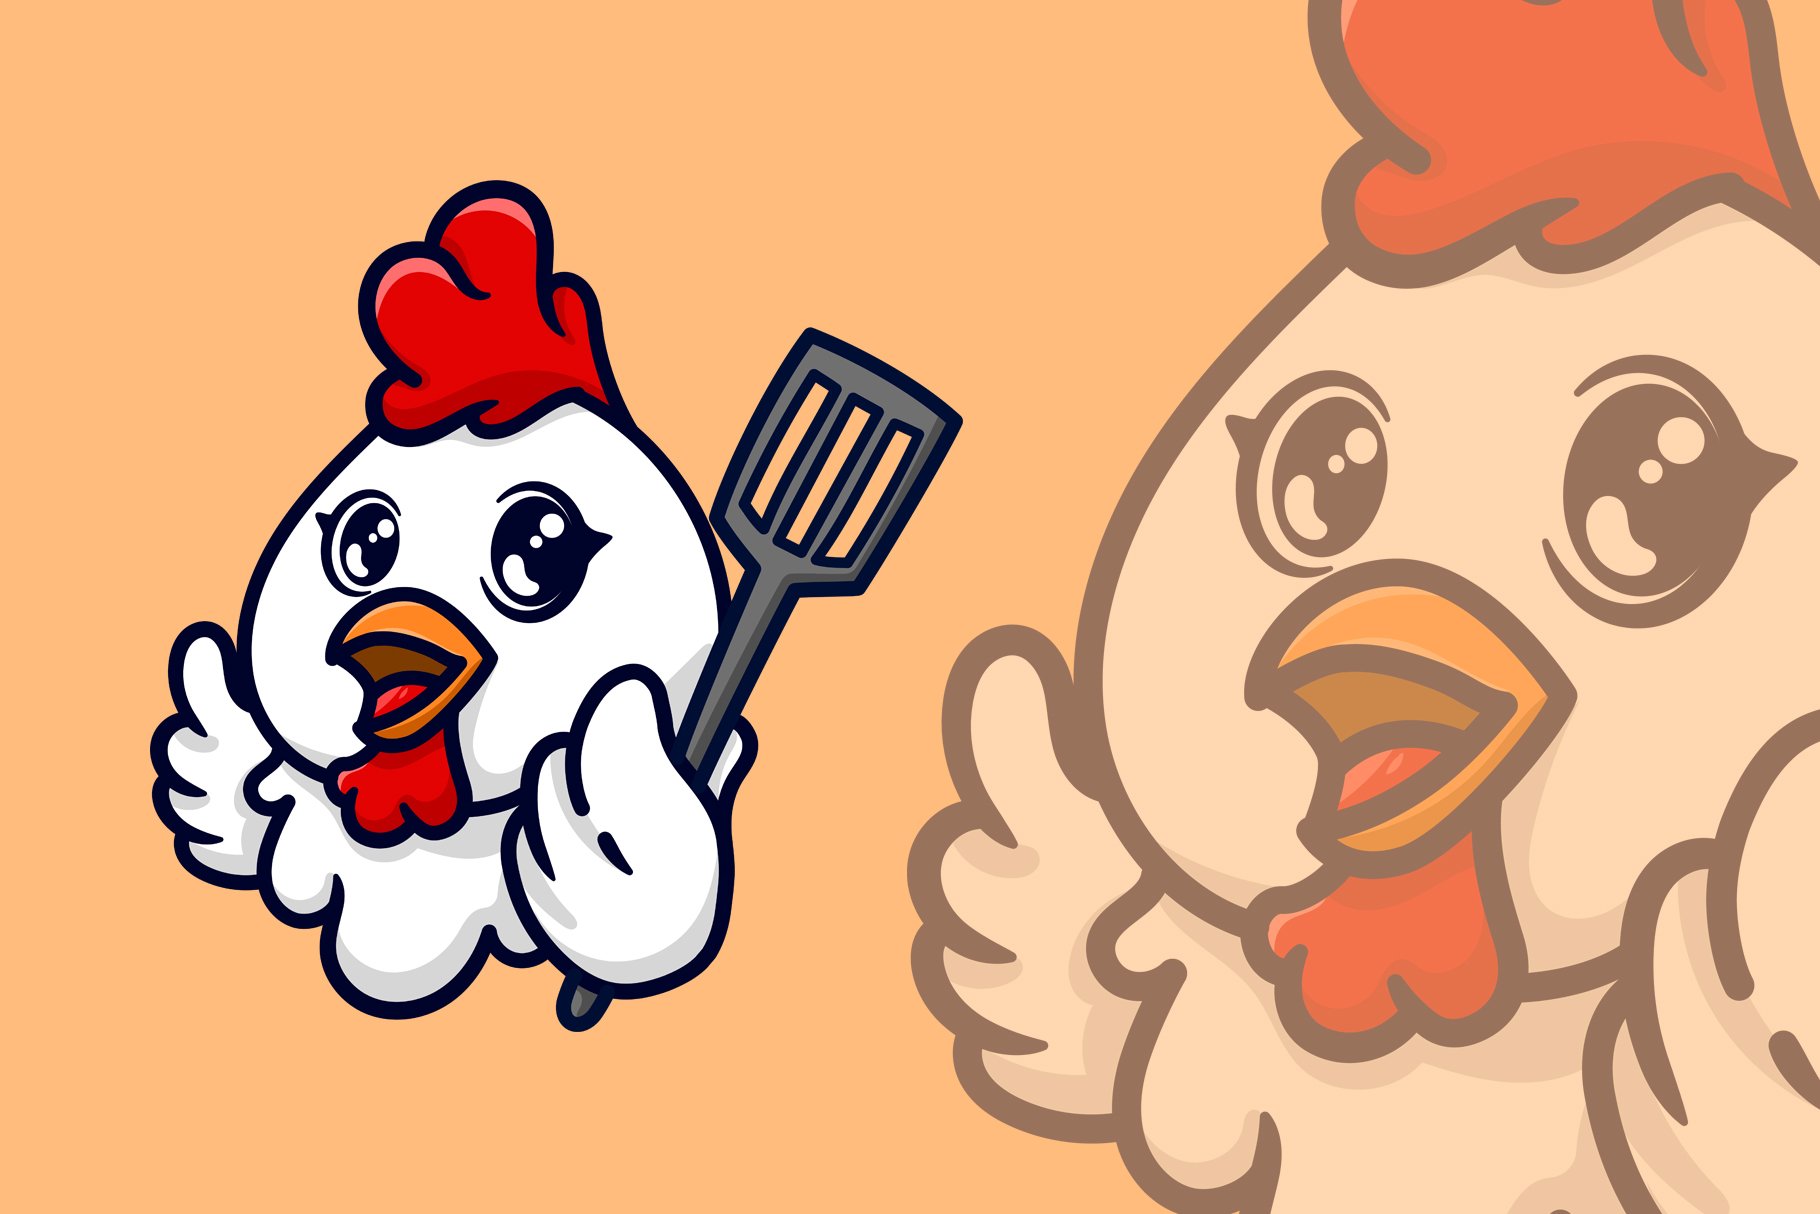 Chicken With Spatula Logo Mascot cover image.